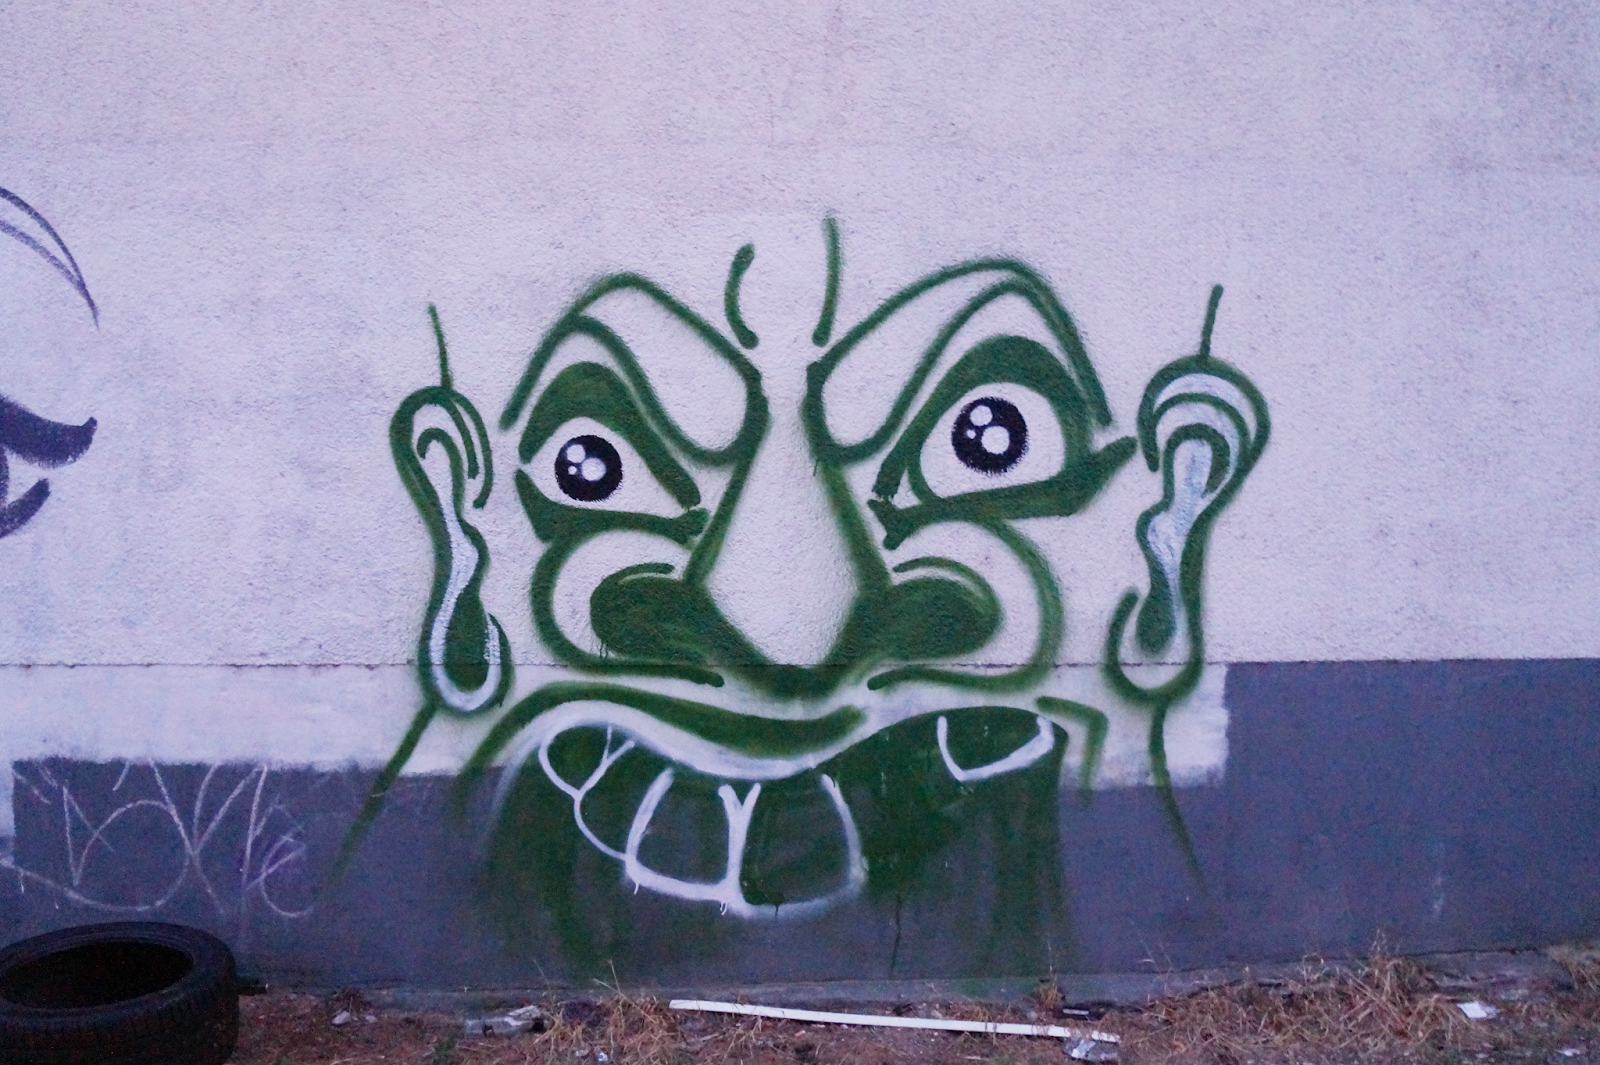 Germany Street Art & Graffiti